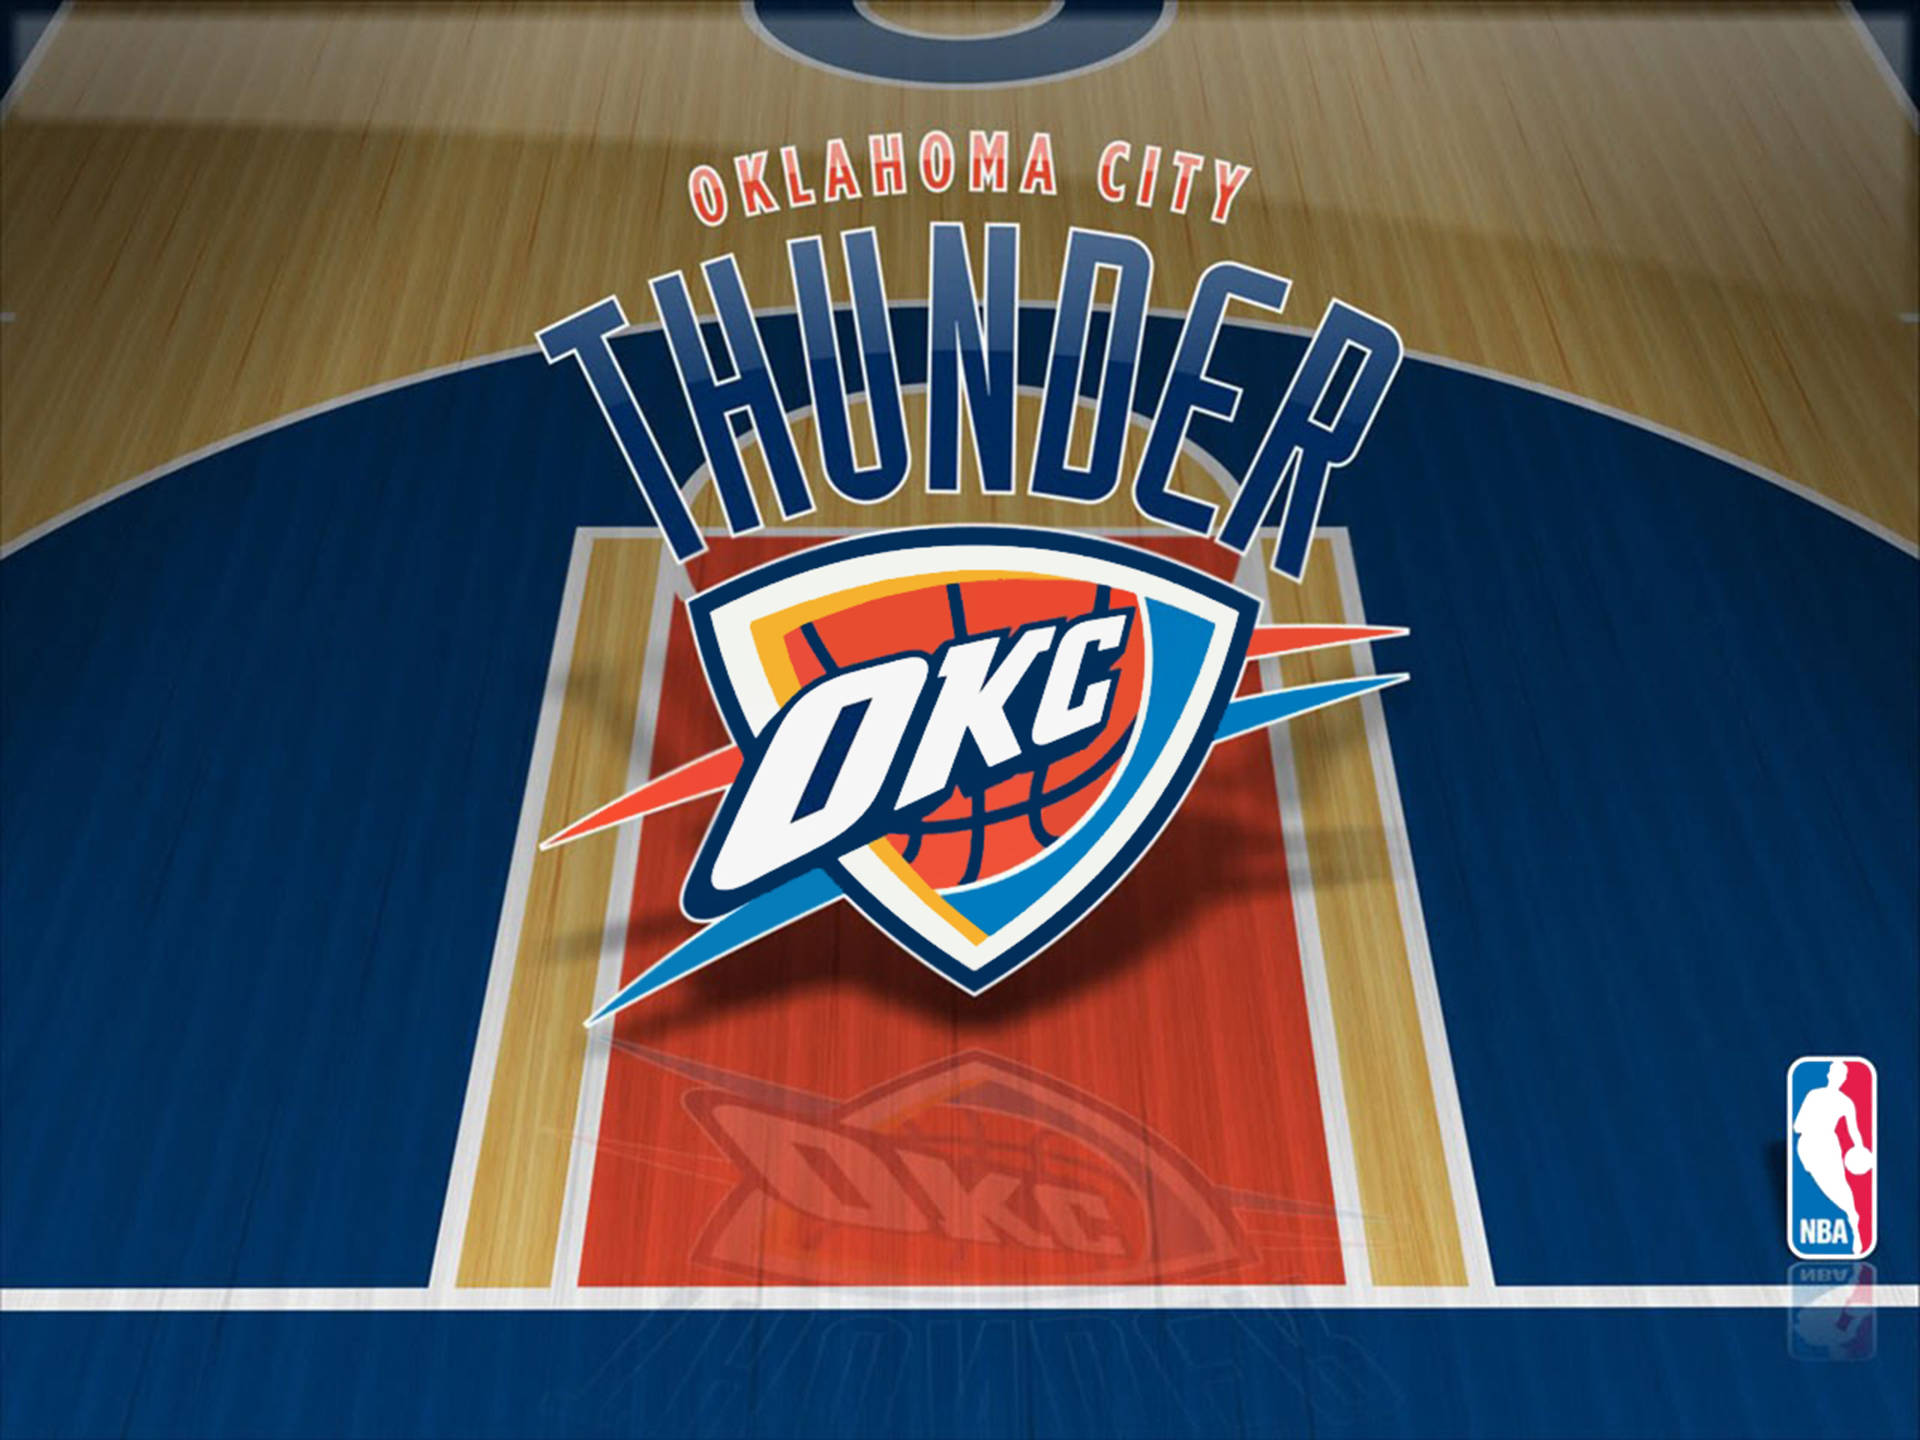 Oklahoma City Thunder Court Illustration Wallpaper